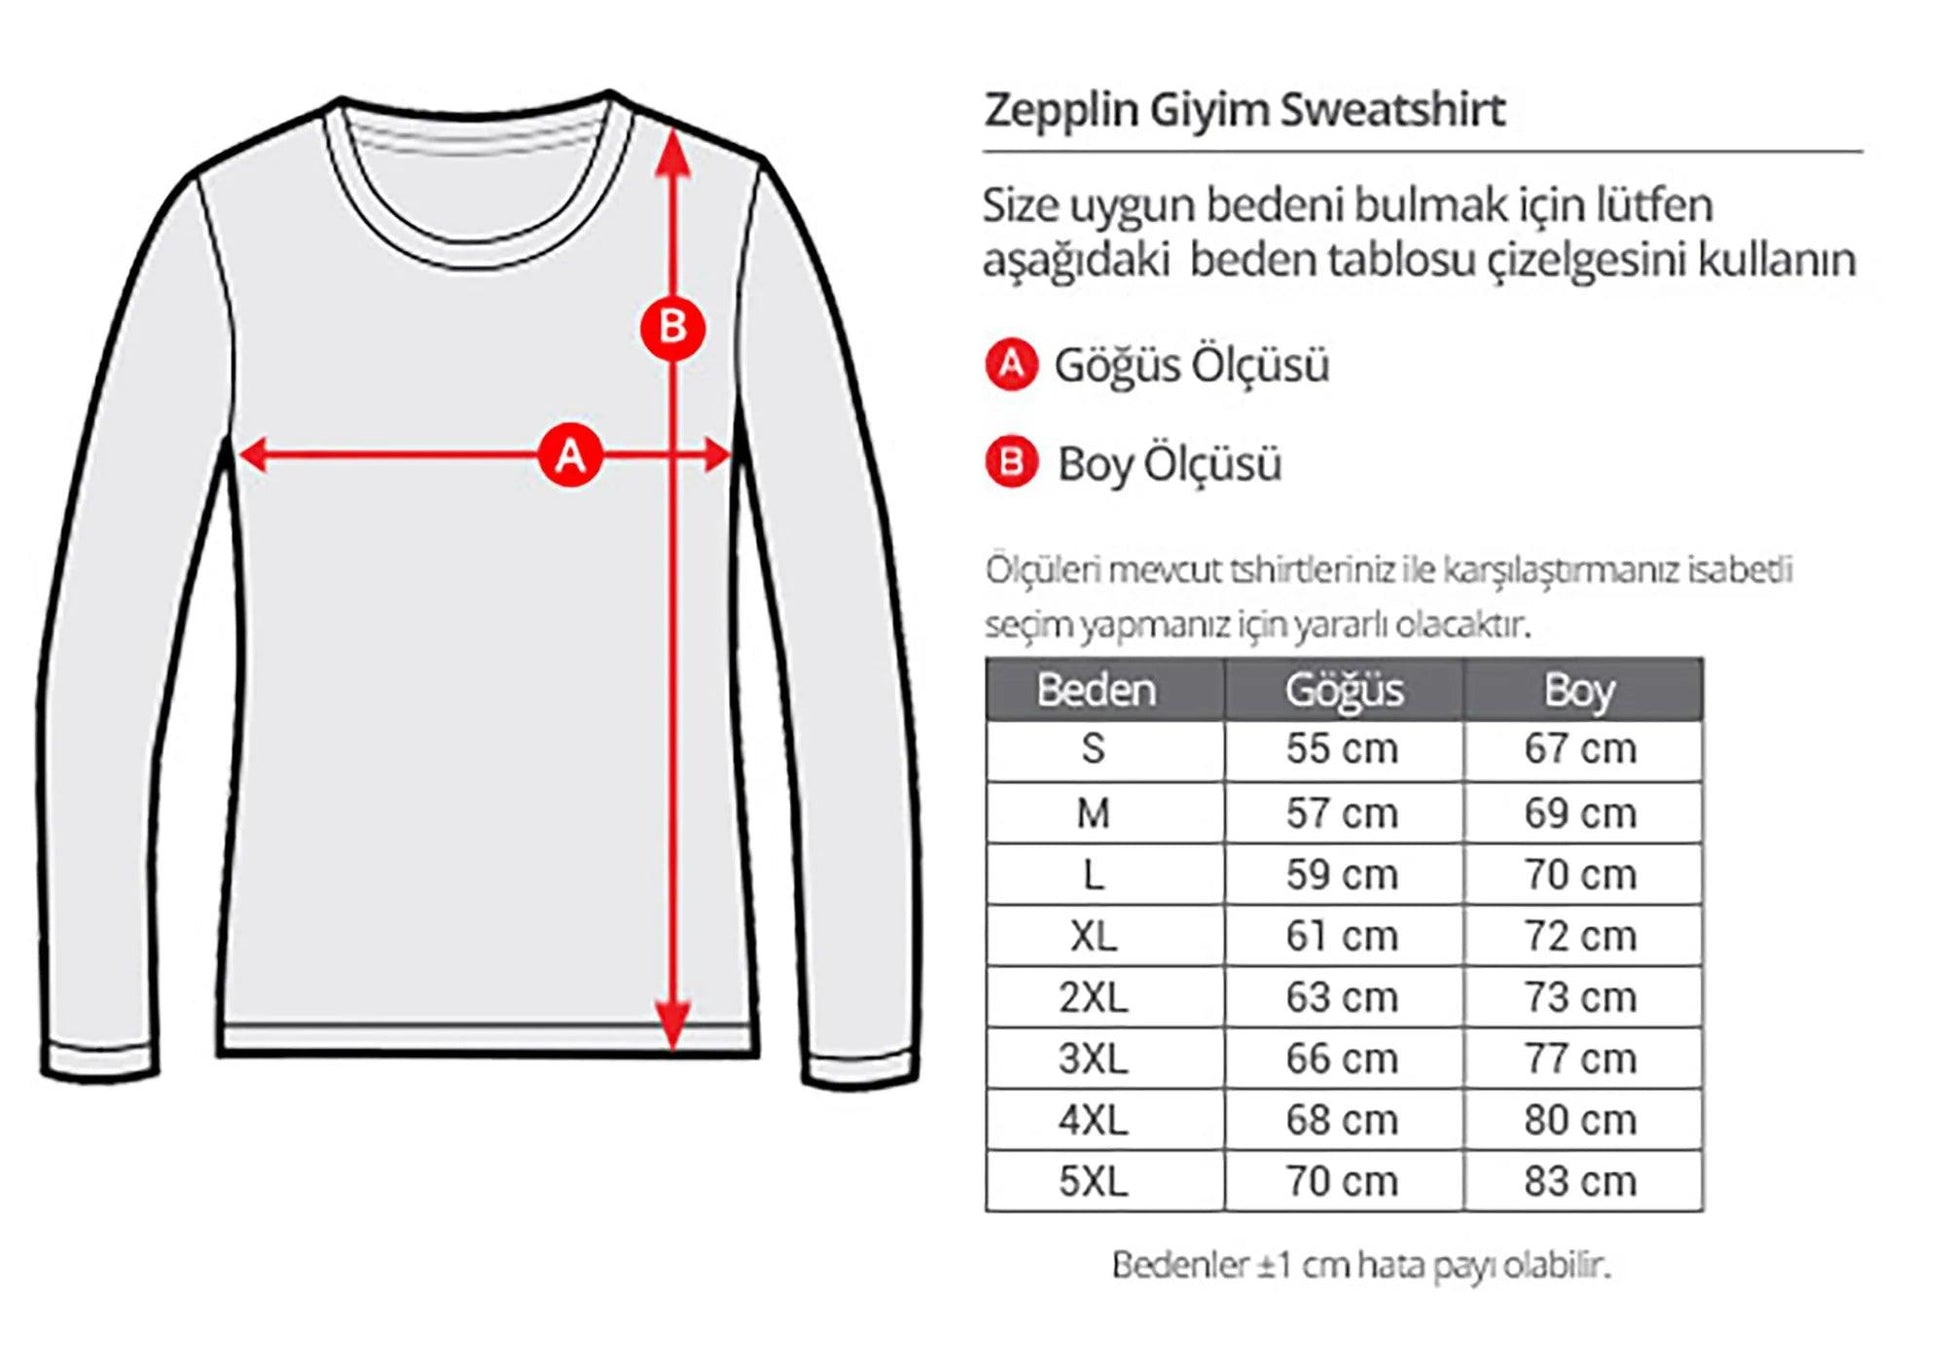 John Wick chapter 4 Digital illustration Reglan Kol Beyaz Sweatshirt - Zepplingiyim